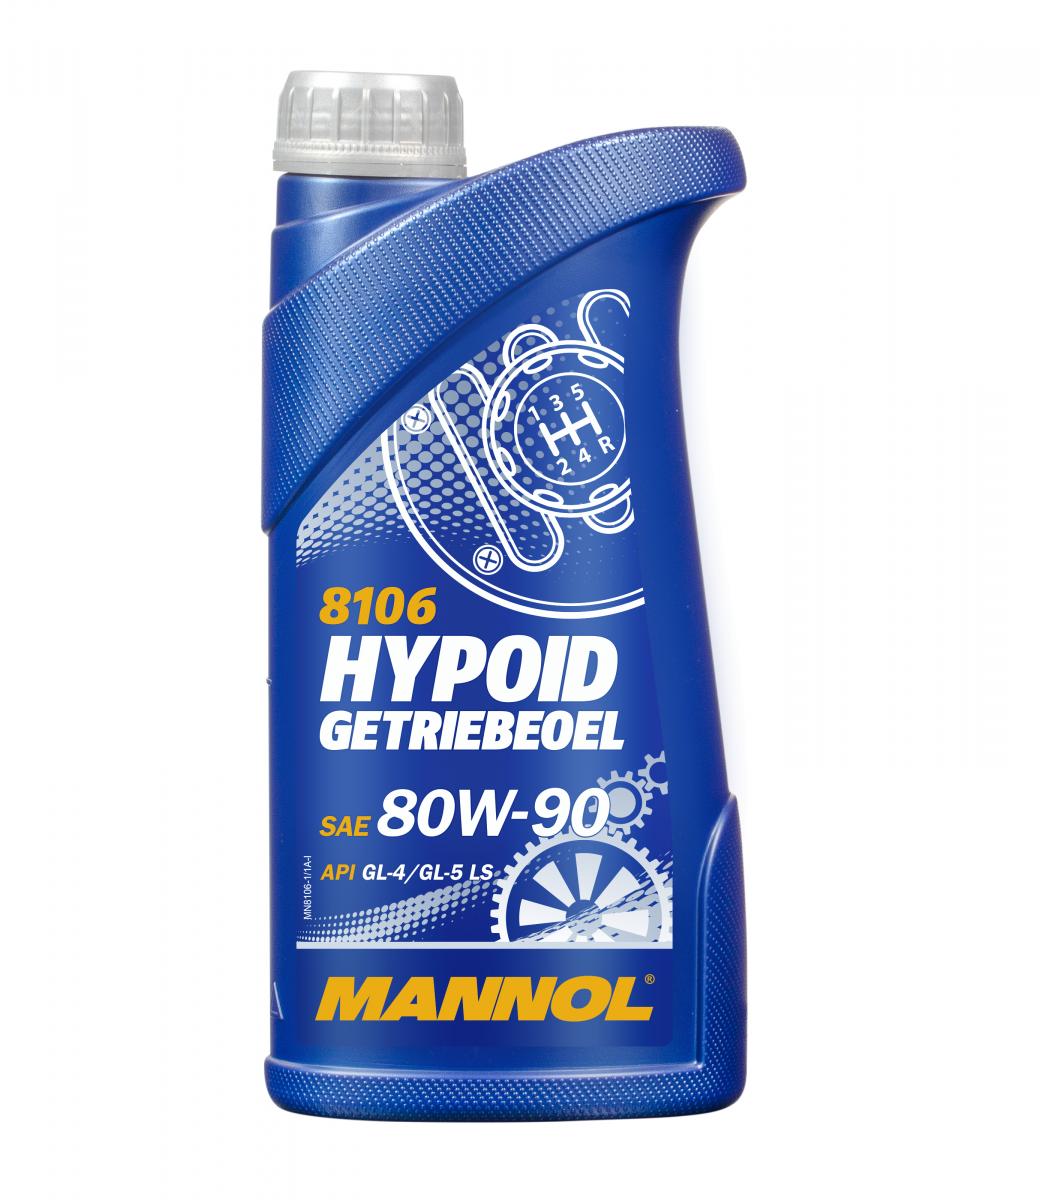 80/90 Hypoid Getriebeoel MANNOL   1л. мин. API GL-4/GL-5 Масло трансмиссионное для МКПП /кор.20шт./